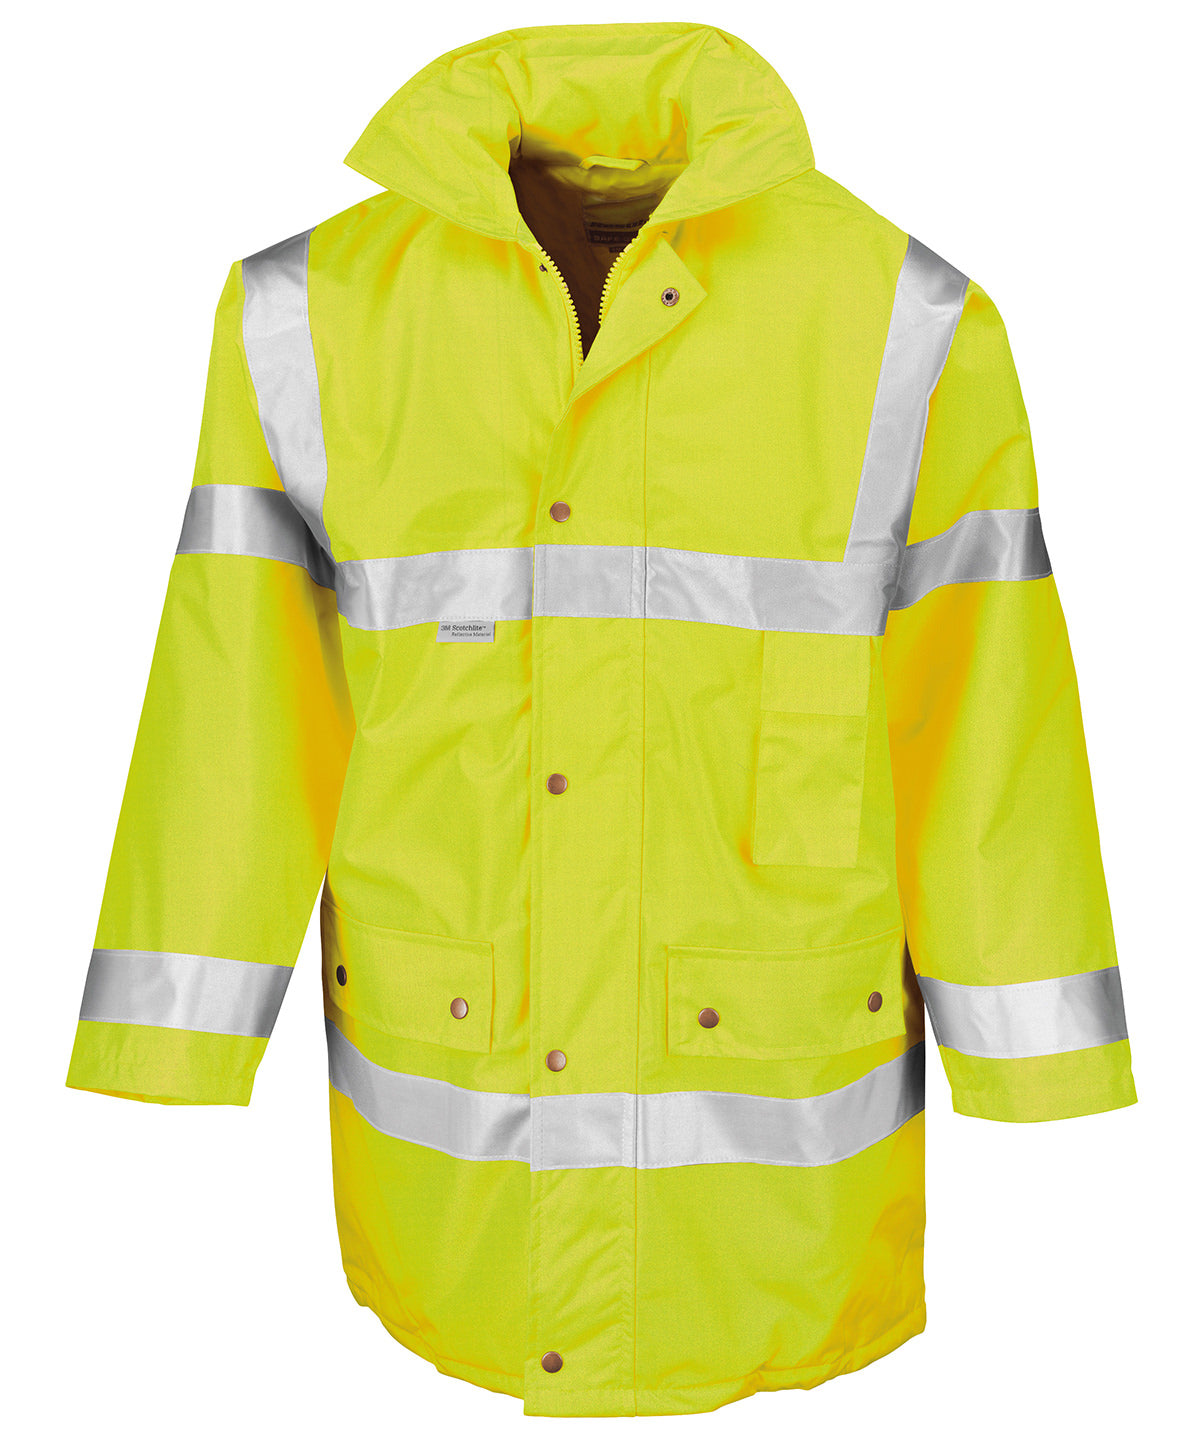 Personalised Jackets - Neon Orange Result Safeguard Safety jacket